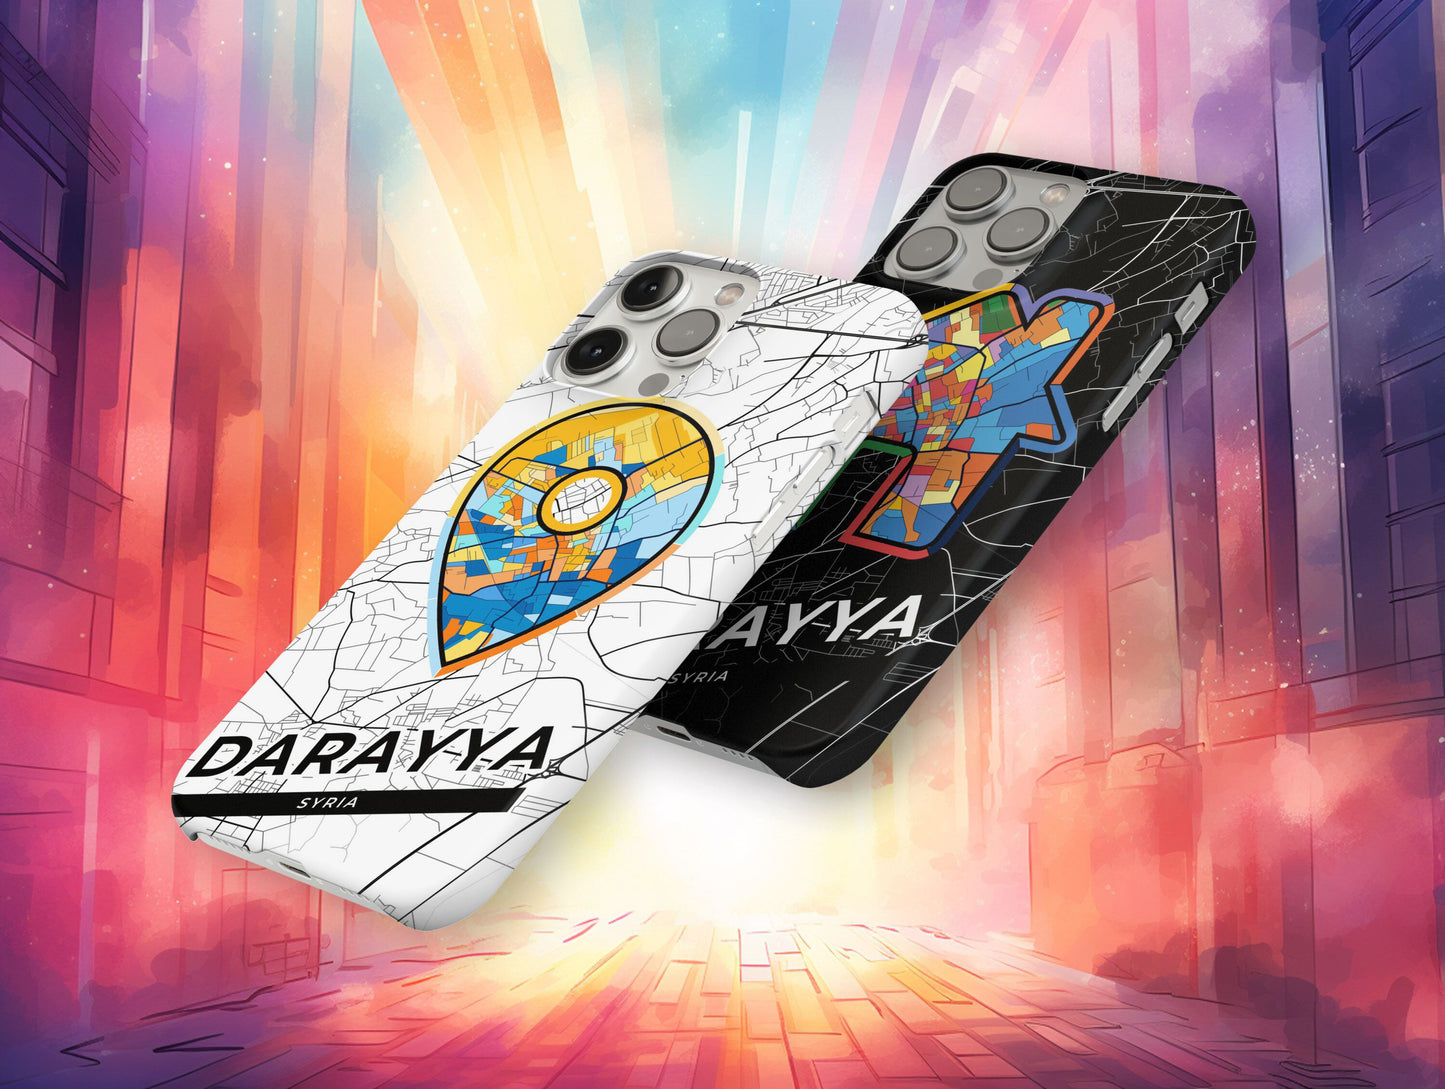 Darayya Syria slim phone case with colorful icon. Birthday, wedding or housewarming gift. Couple match cases.